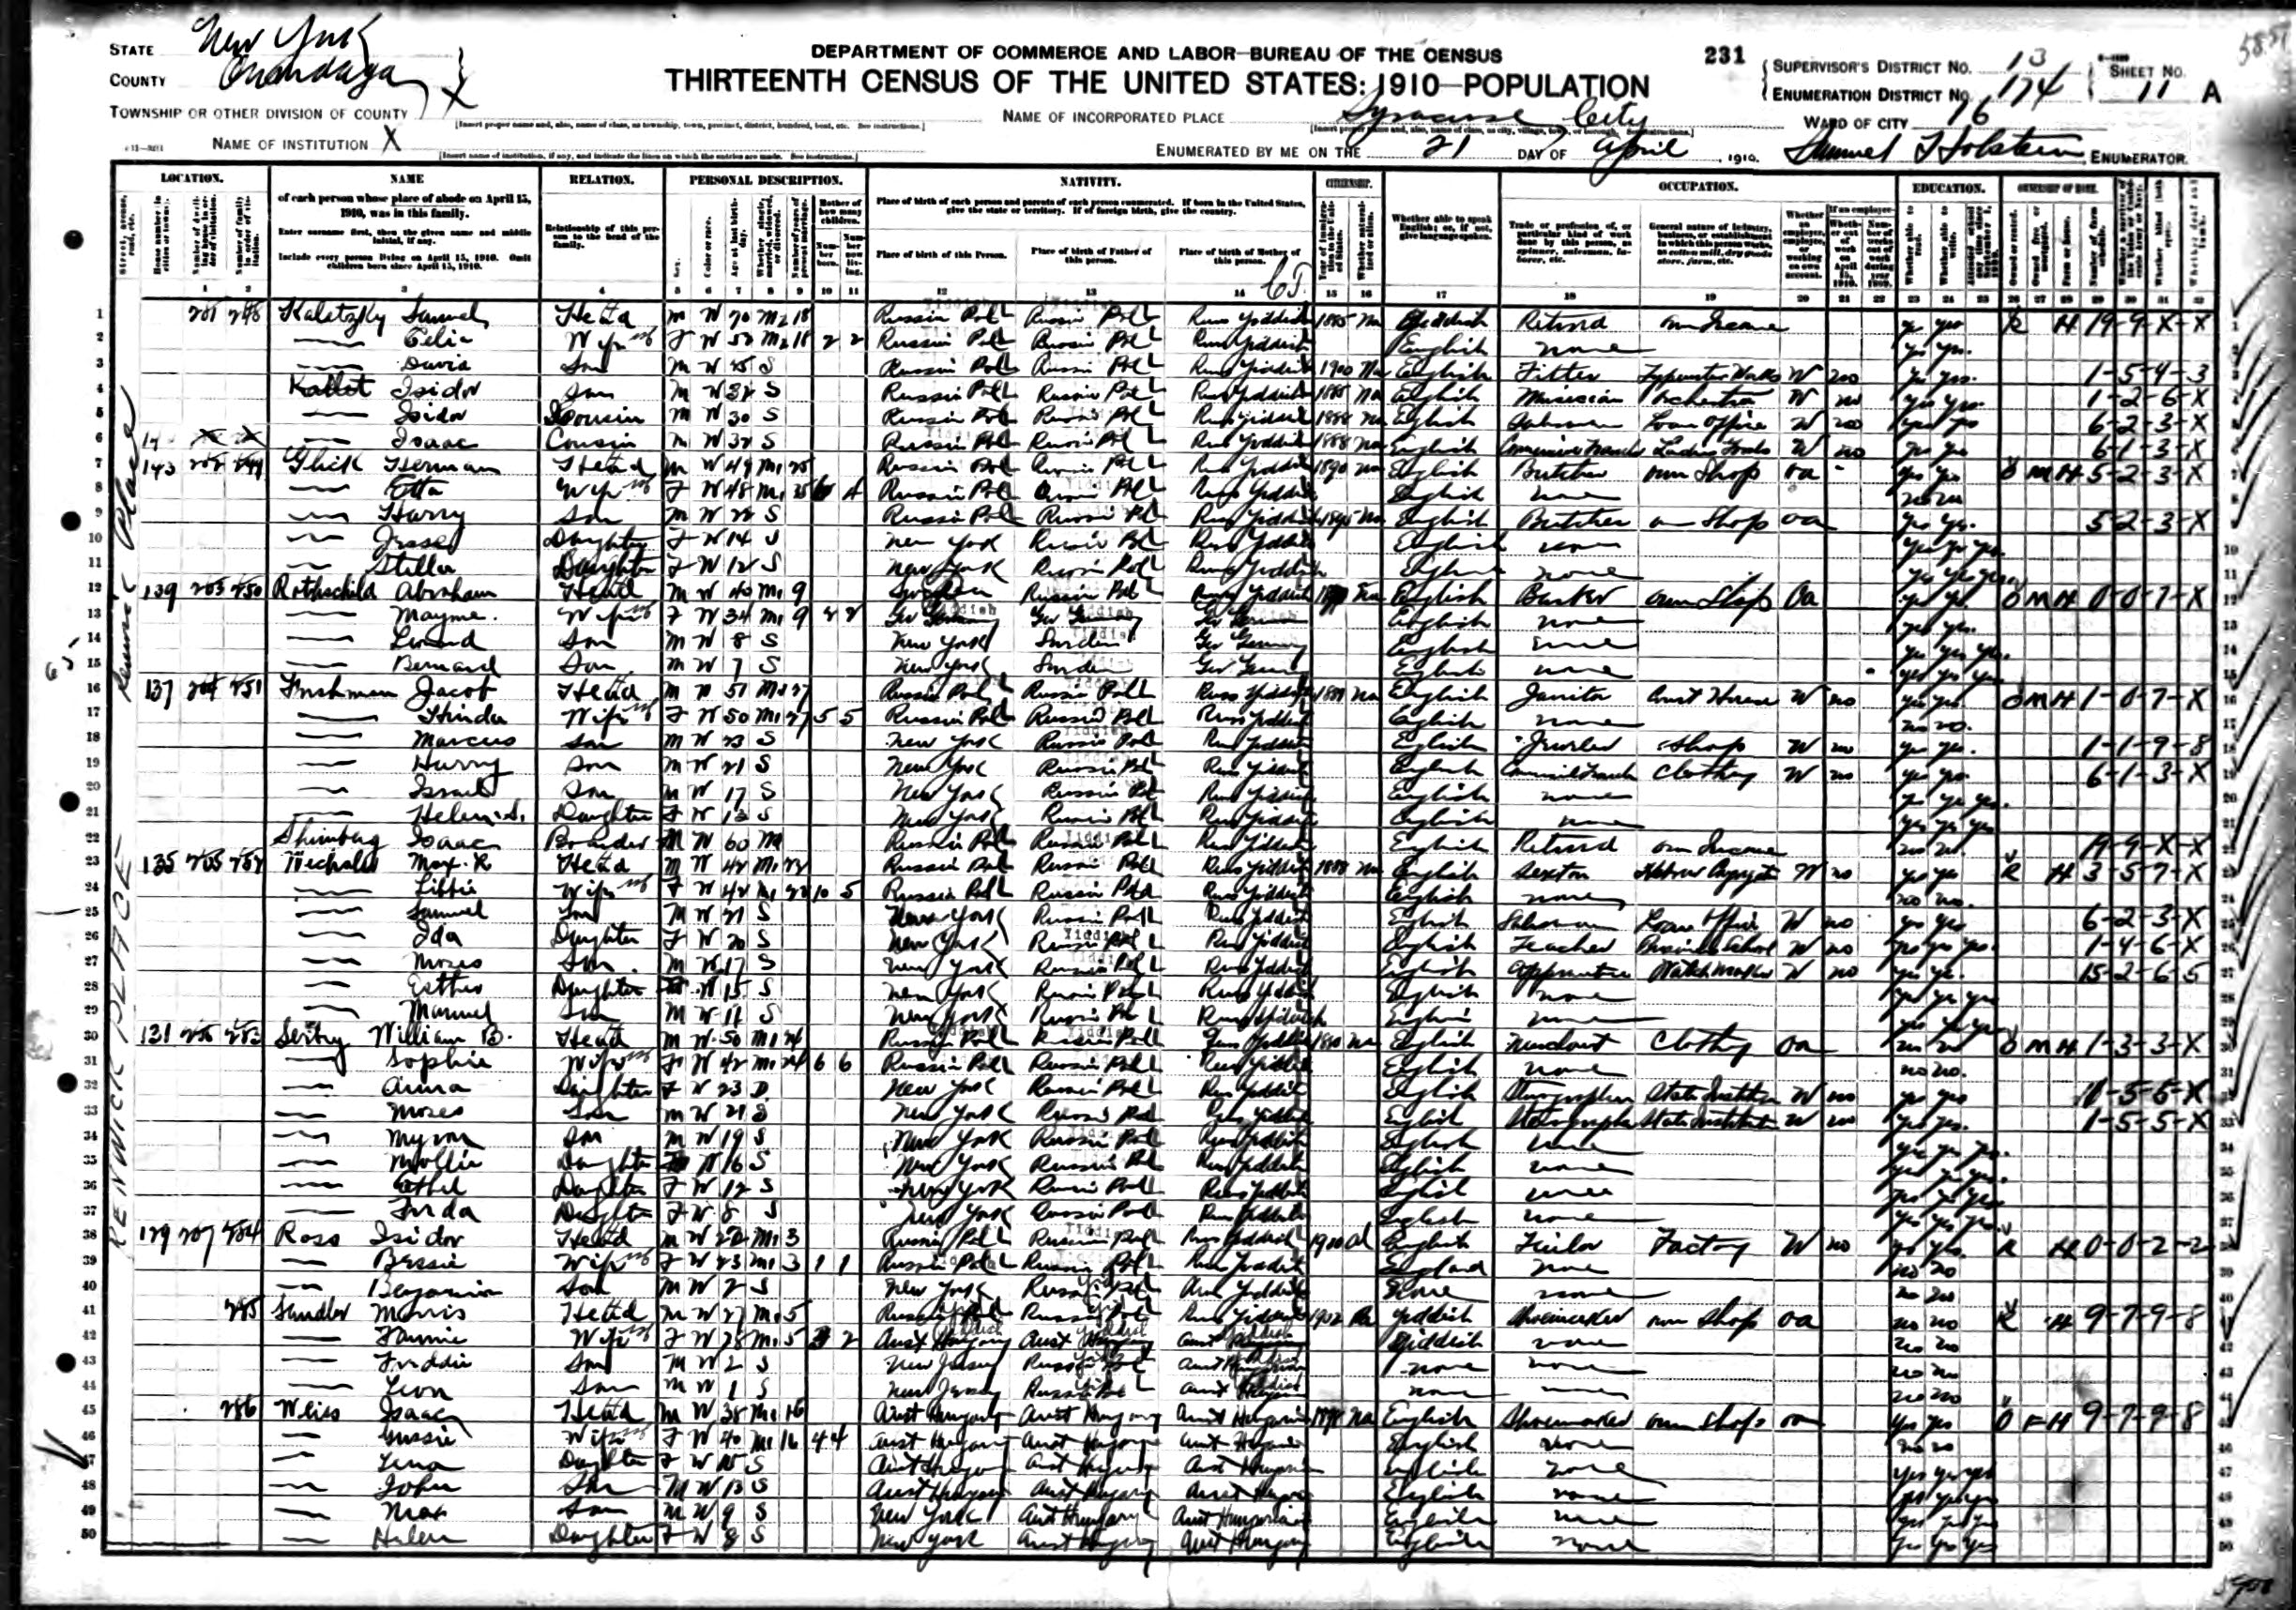 1910 US census William B Serby family